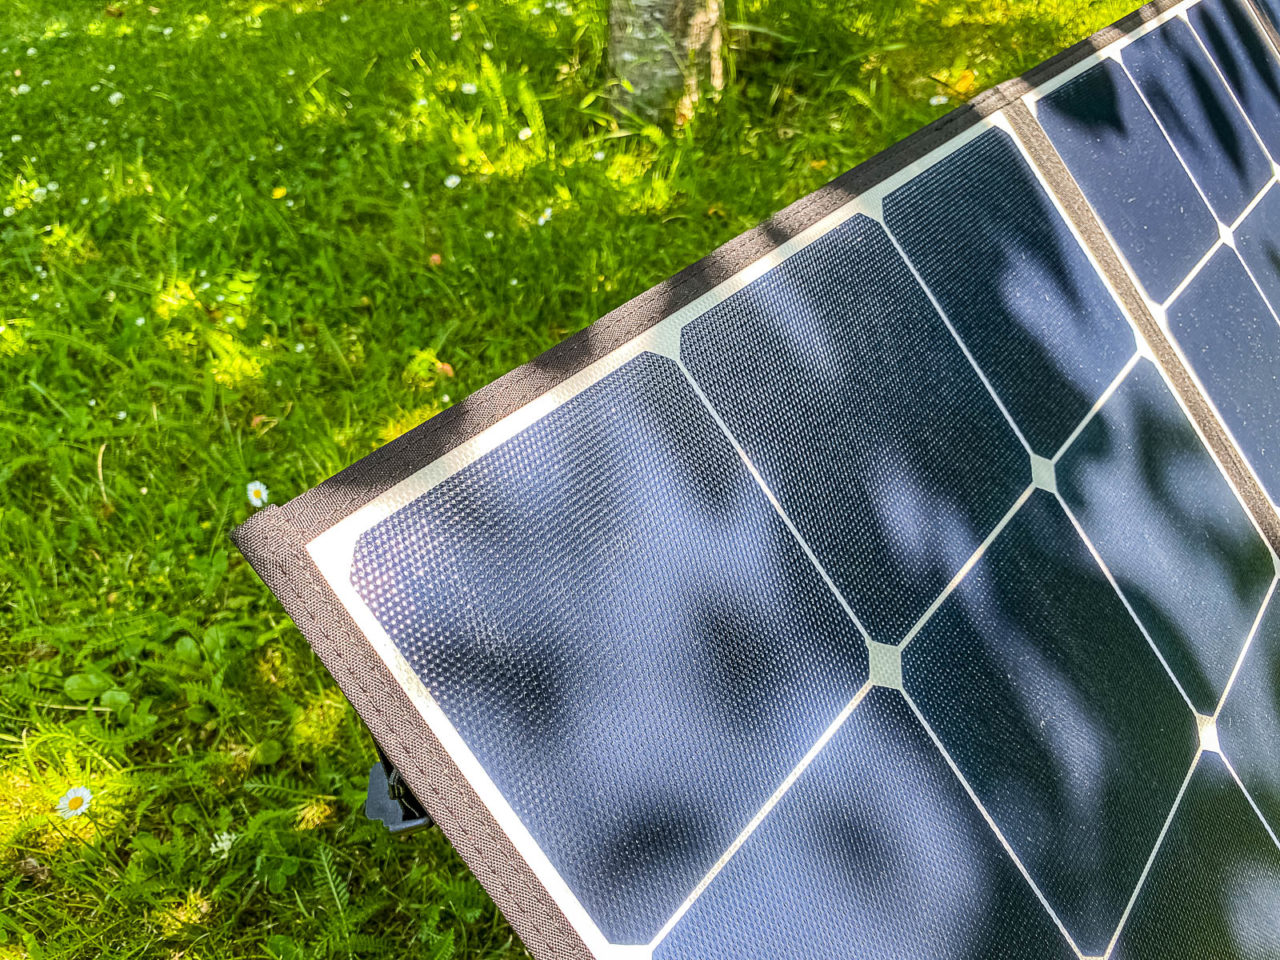 PowerOak Bluetti SP120 Solarpanel Test - Die Solarzellen aus der Nähe